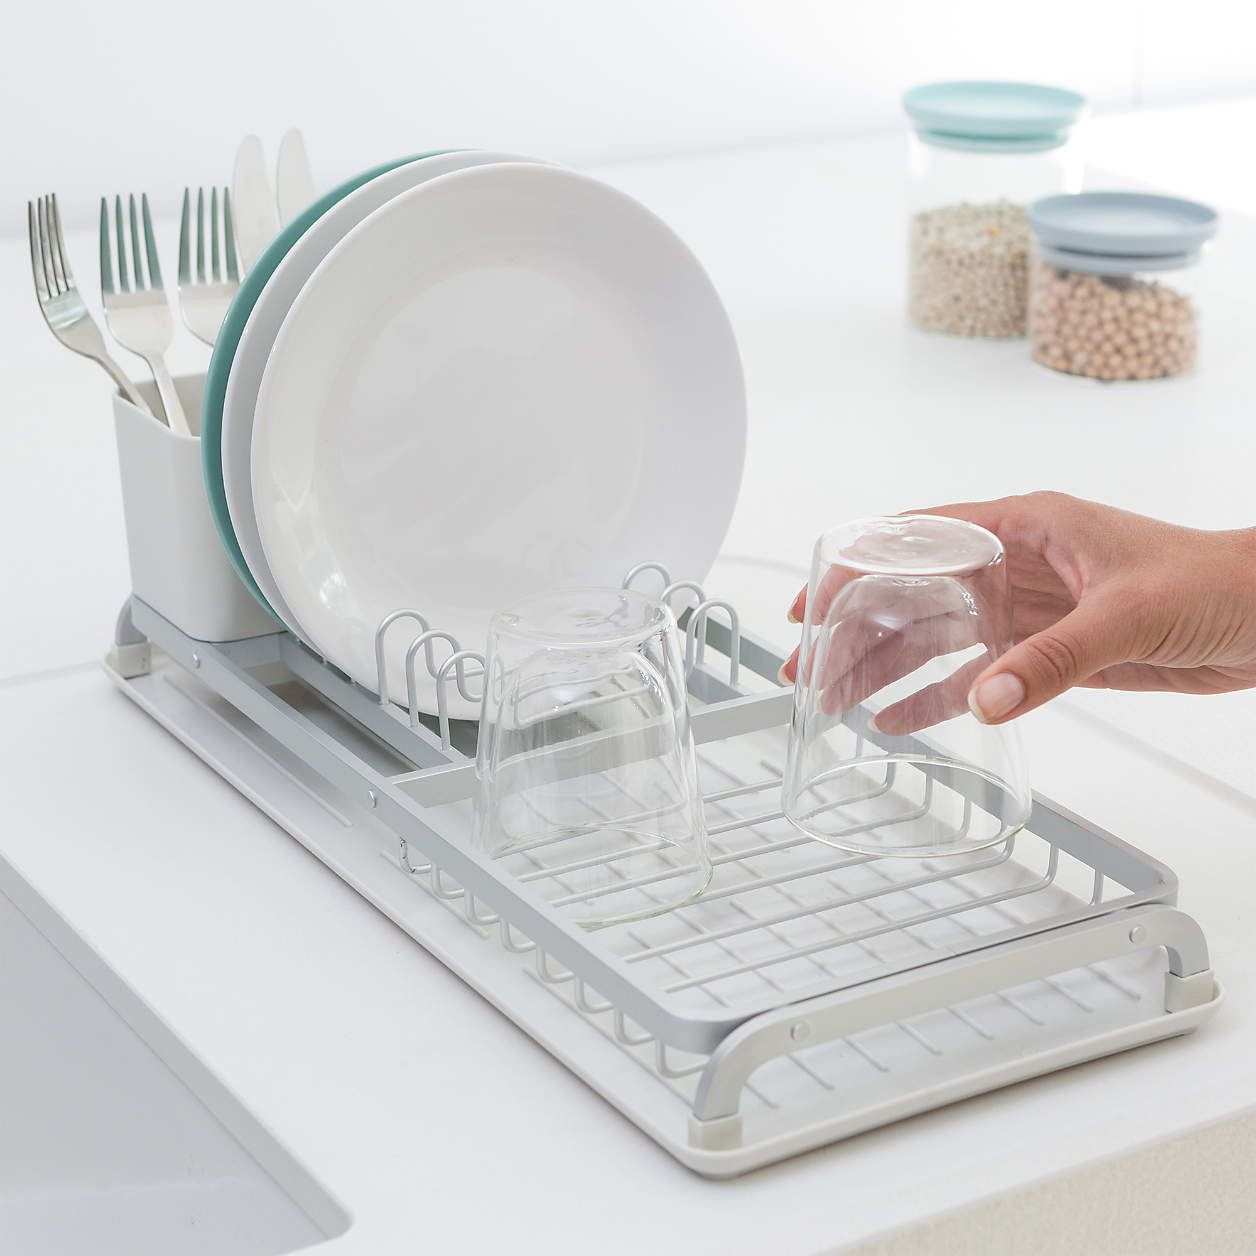 AllTopBargains 1 Dish Drying Mat Absorbent Pad Anti Skid 18x14 Draining Under Dish Glass Rack